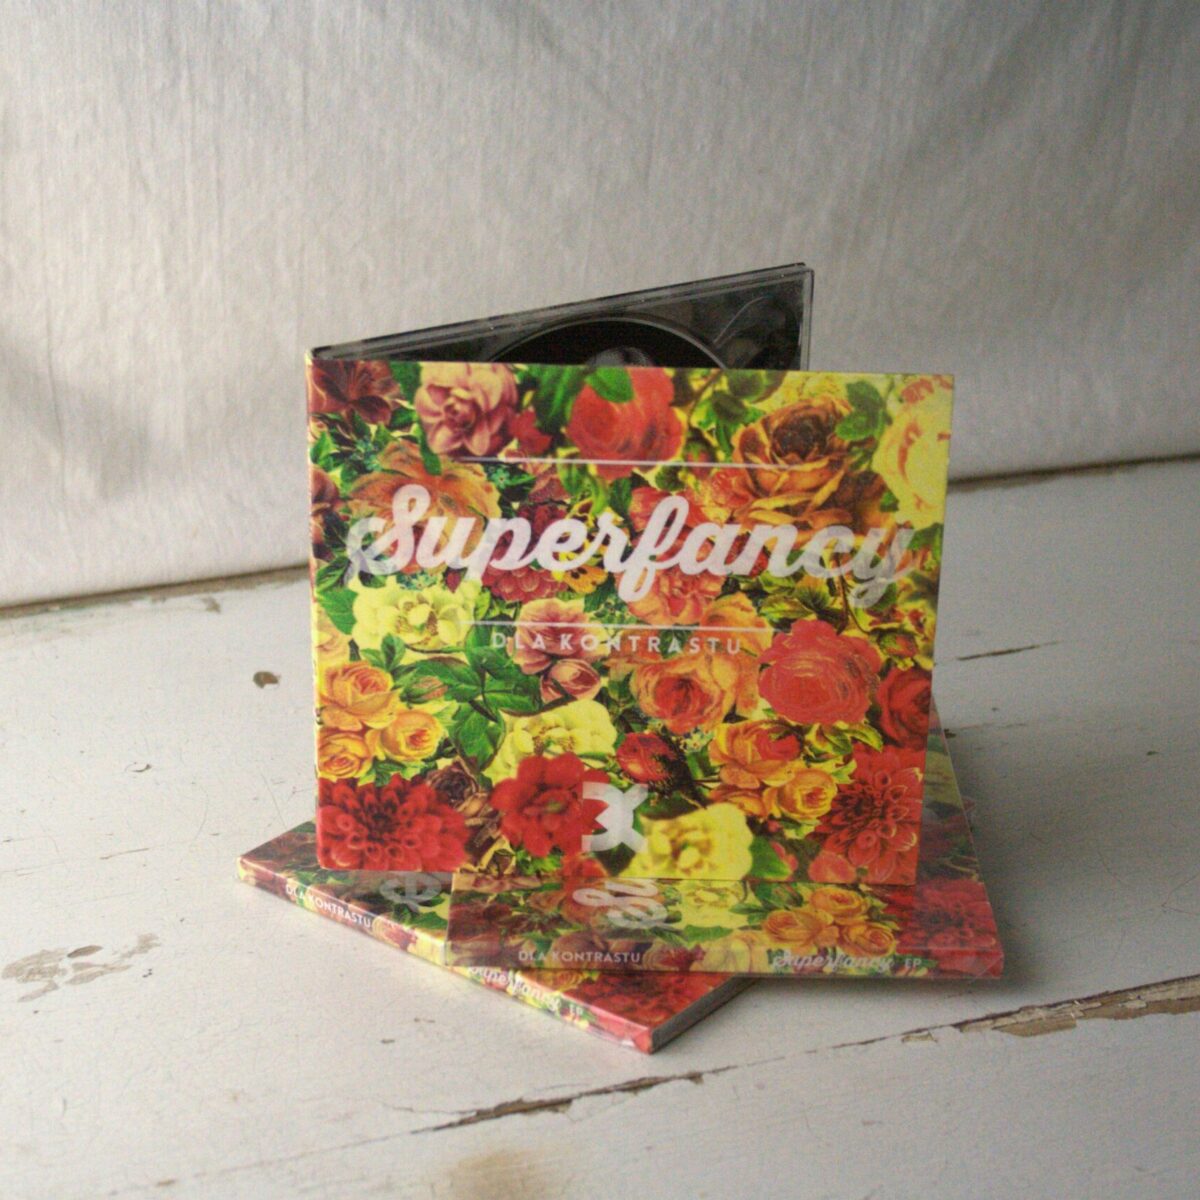 Superfancy - CD